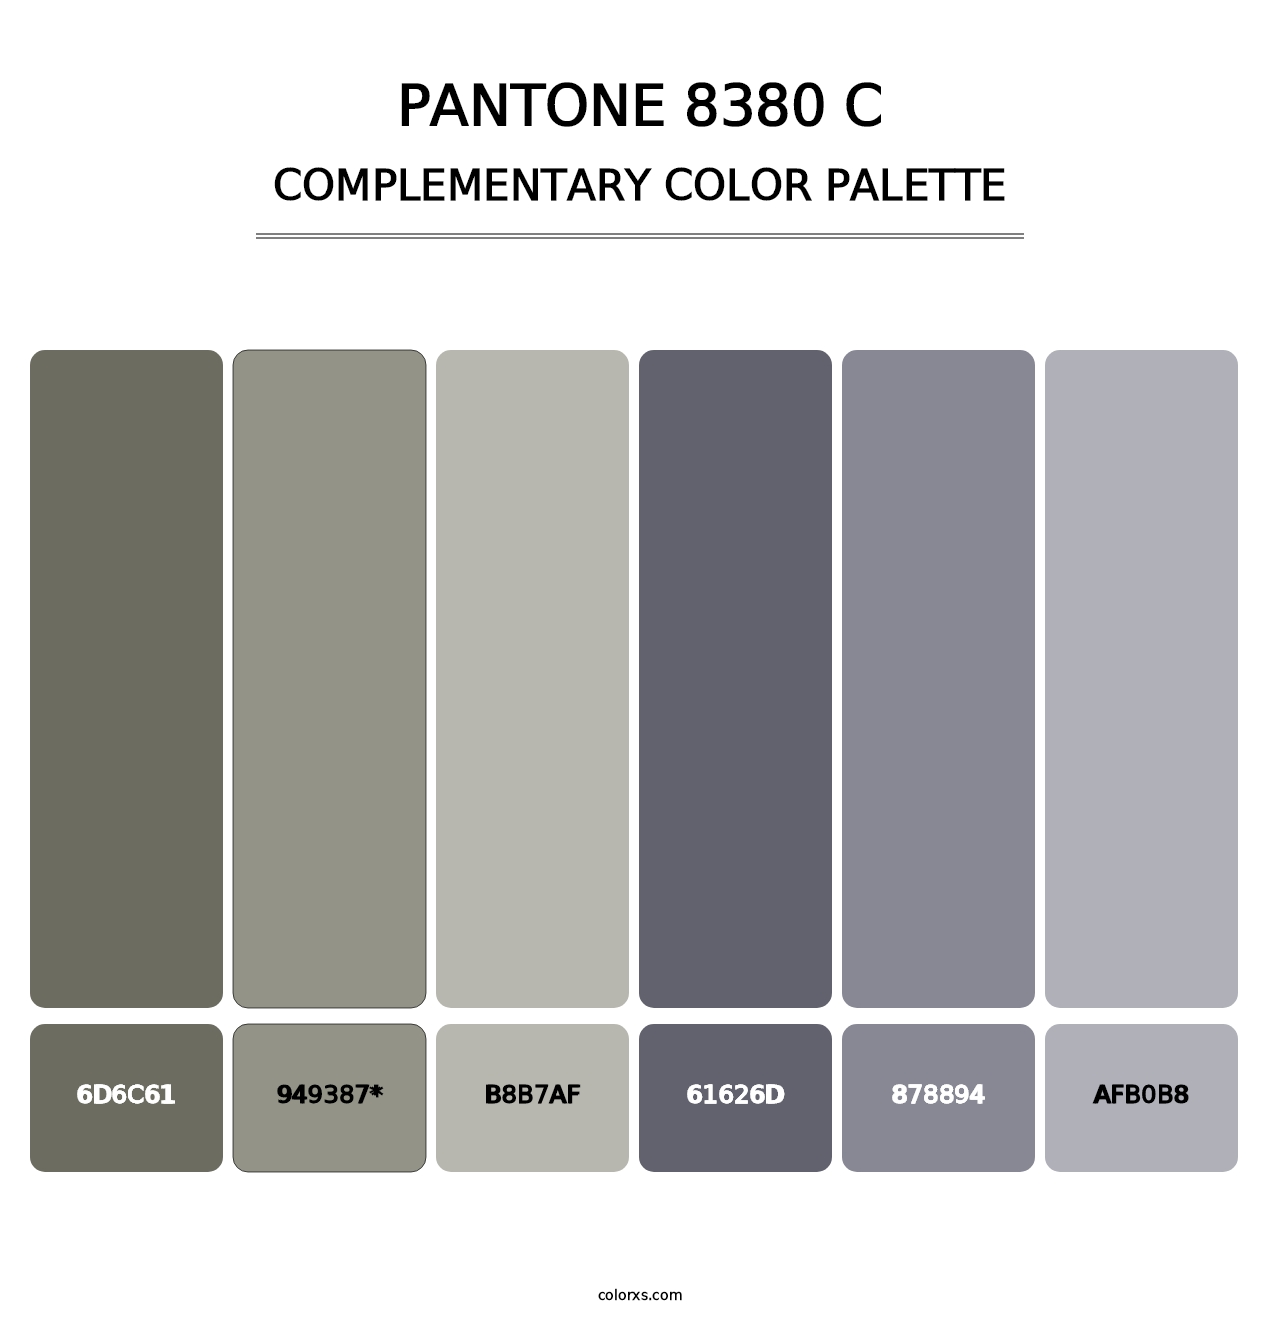 PANTONE 8380 C - Complementary Color Palette